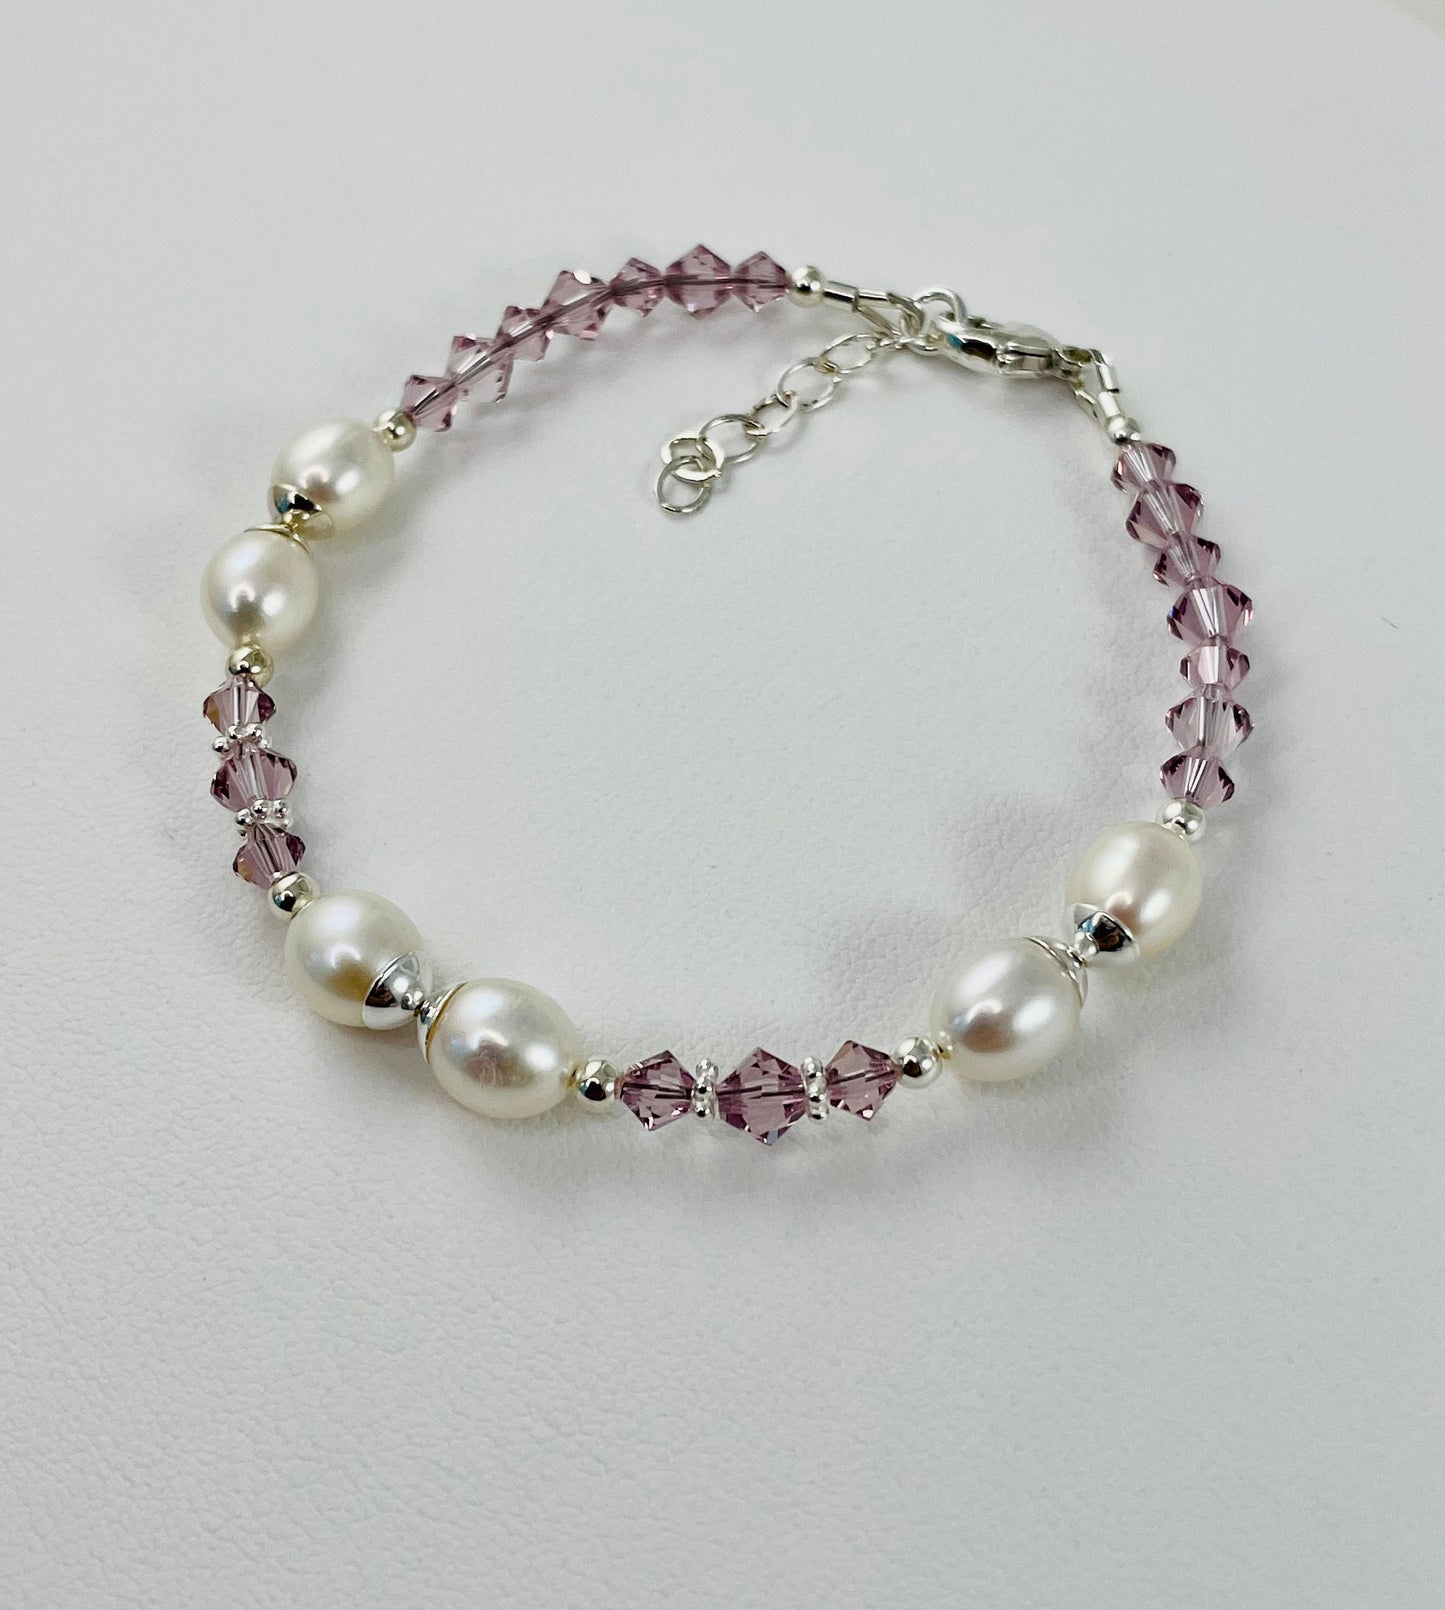 30th Thirtieth Gift for Women,Friend 30th Birthday Gift,30th Birthday Pearl Birthstone Bracelet,Three Set Pearl Bracelet,Birthstone Bracelet